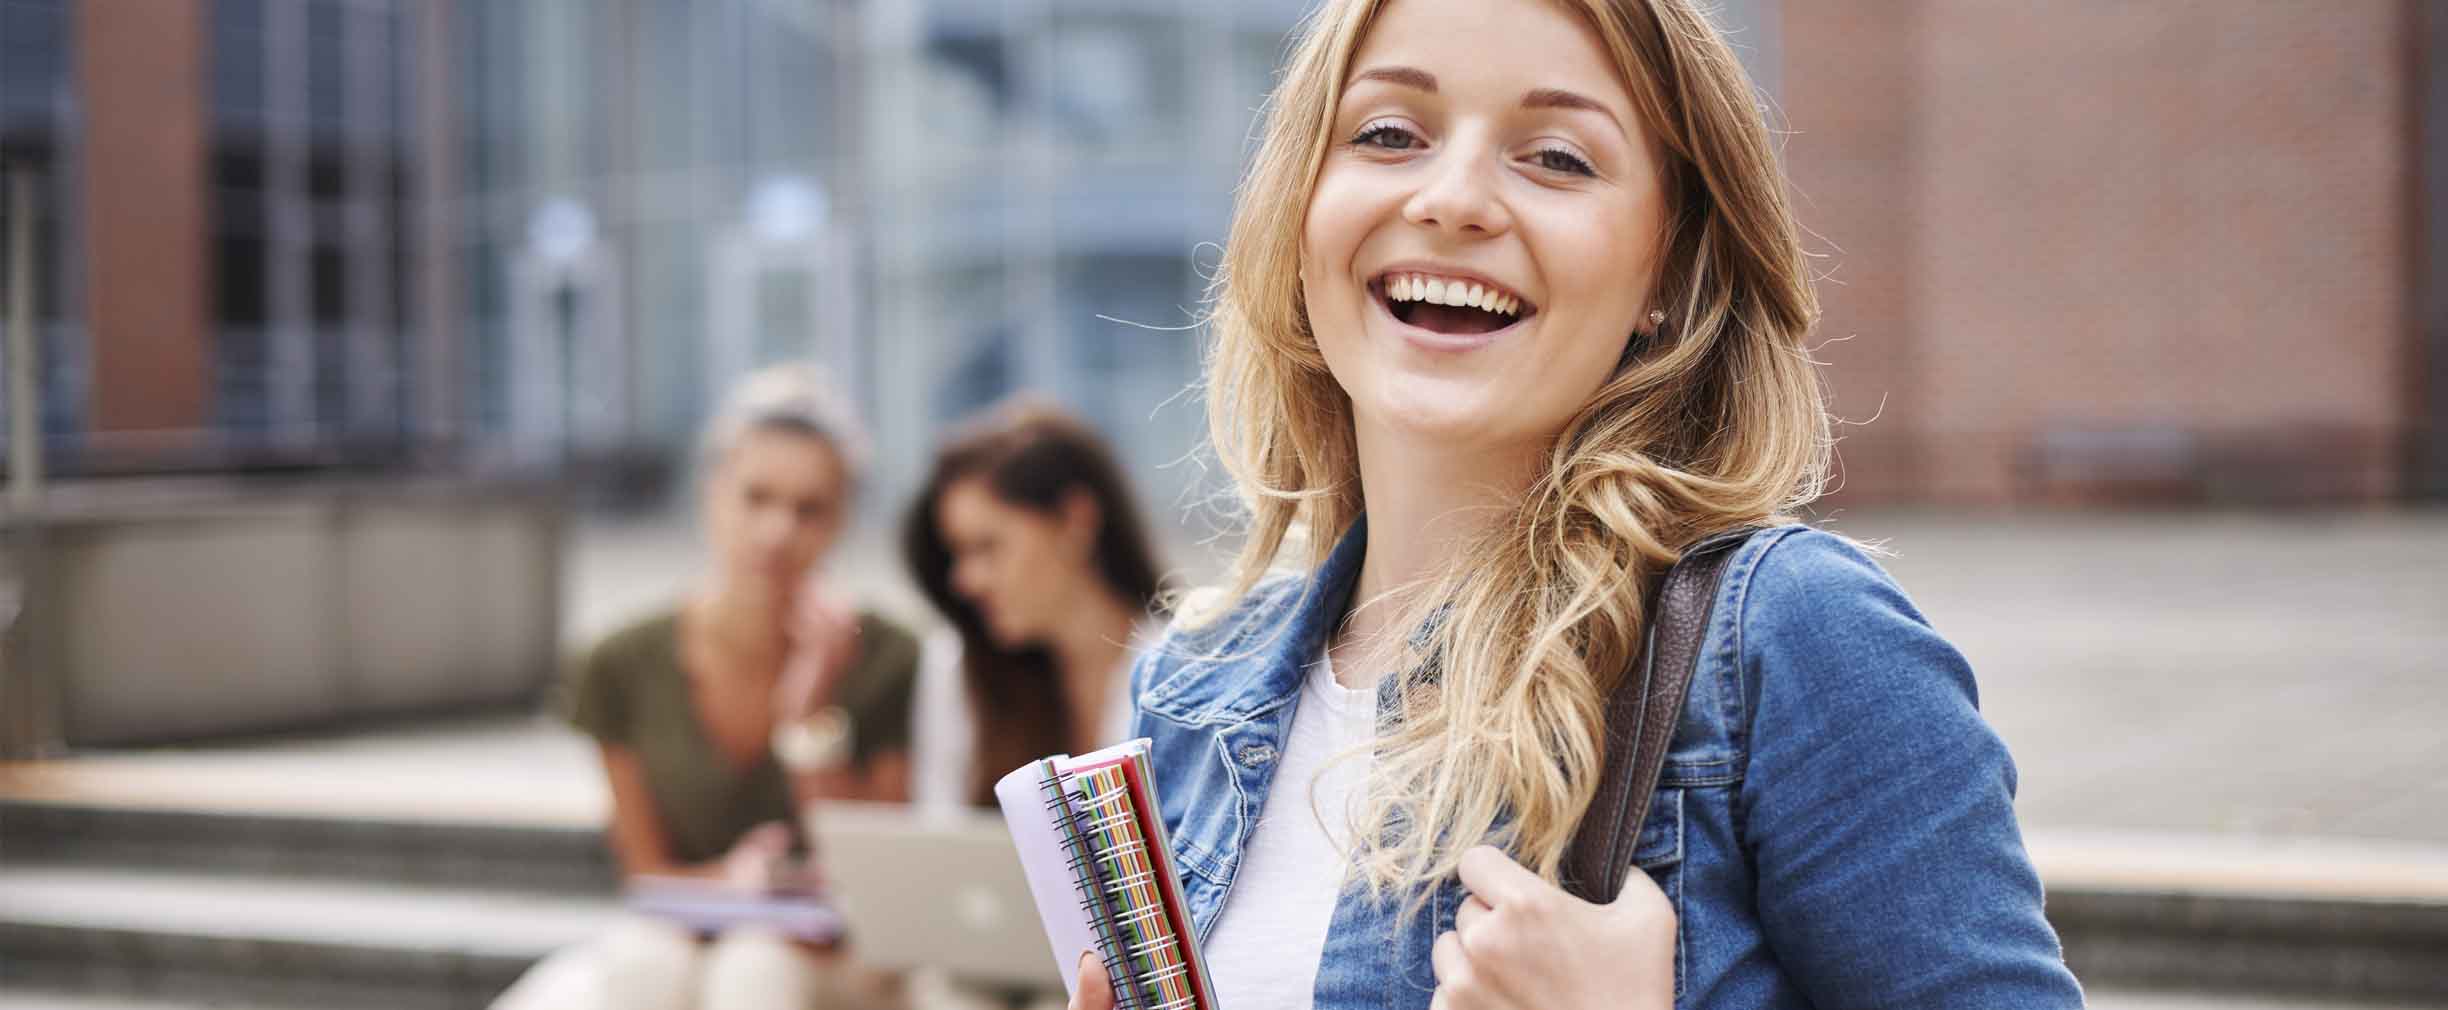 female student smiling holding books